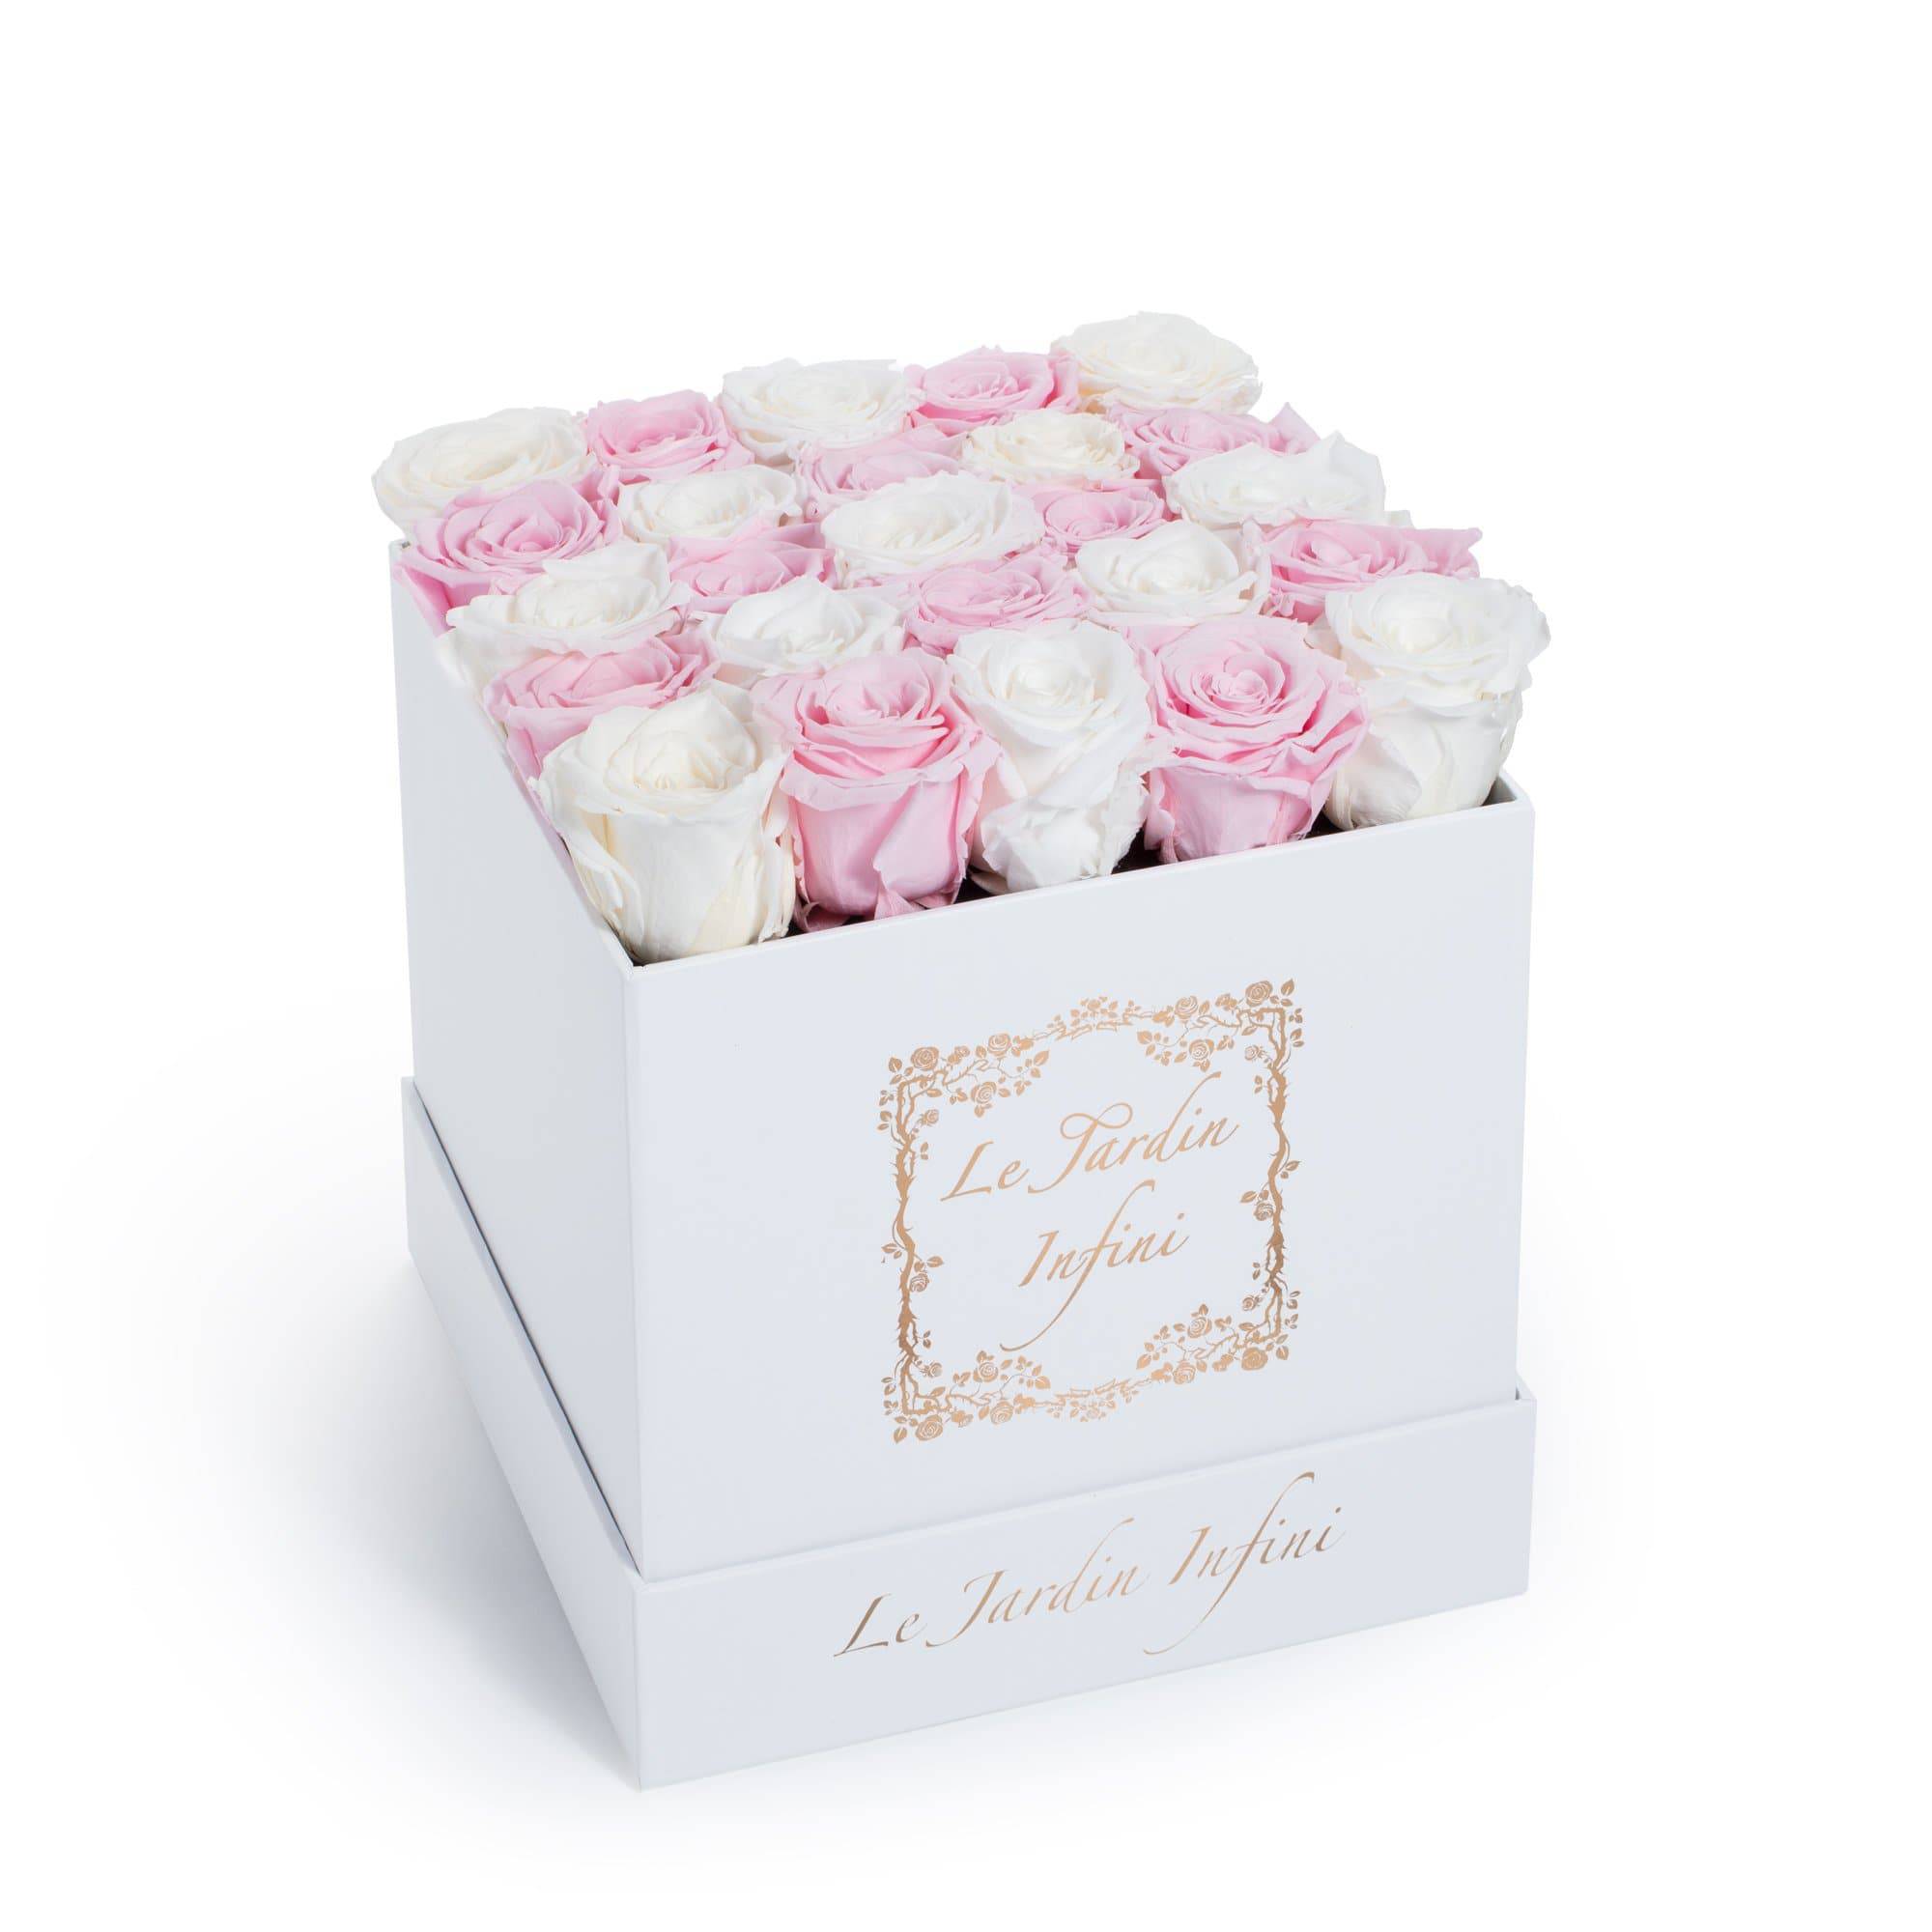 Checker White & Soft Pink Preserved Roses - Medium Square White Box - Le Jardin Infini Roses in a Box